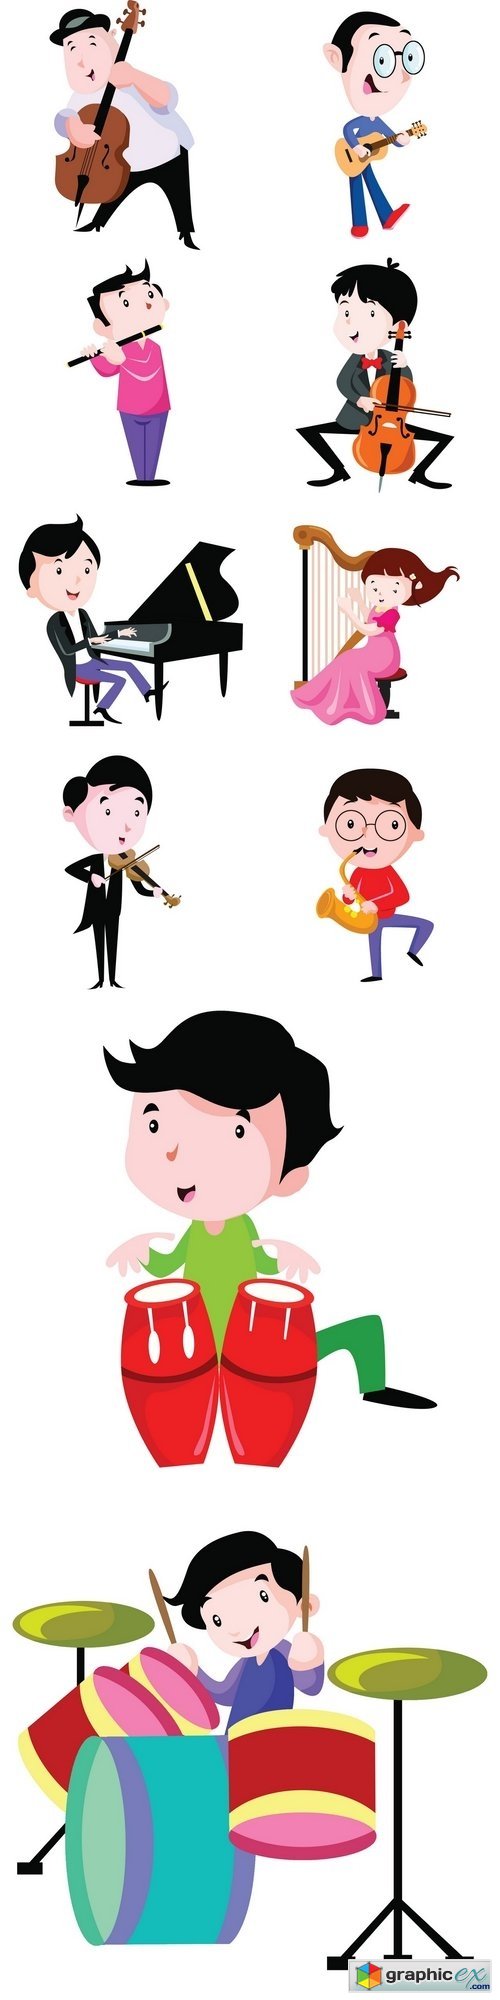 Musician play music instrument illustration